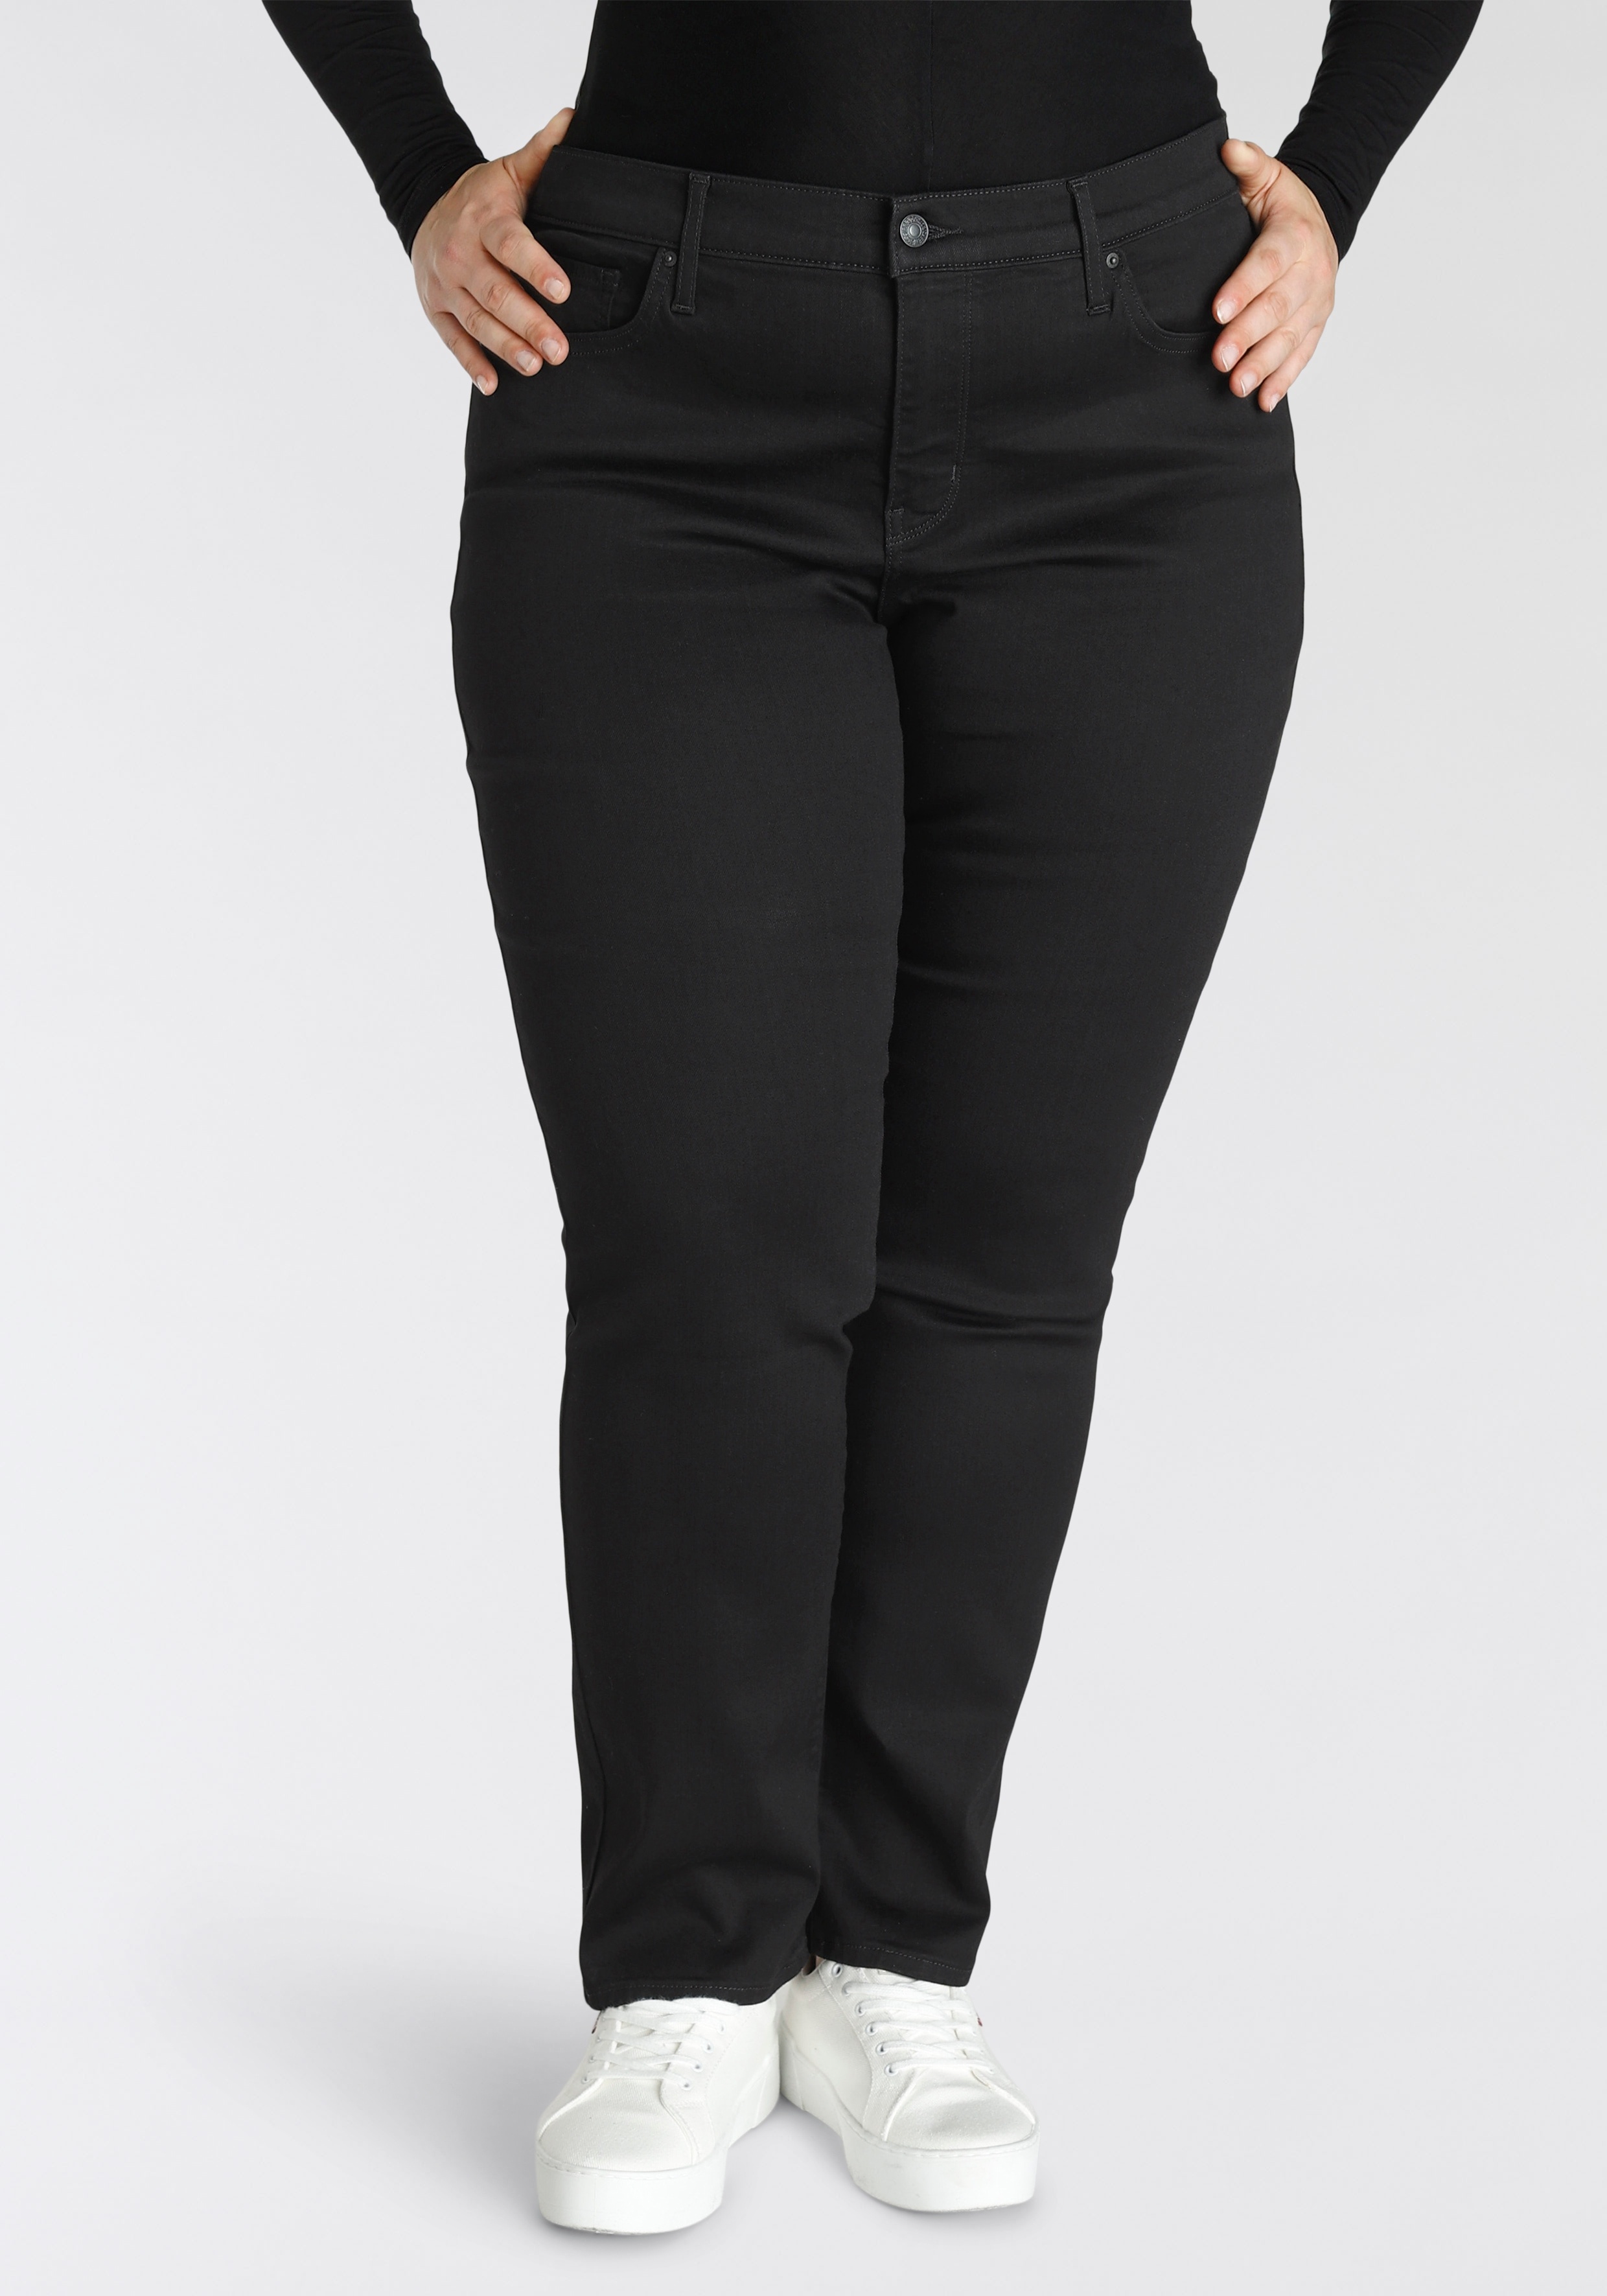 Straight-Jeans LEVI'S PLUS "314 Shaping Straight" Gr. 22 (52), Länge 32, schwarz (soft black) Damen Jeans Gerade